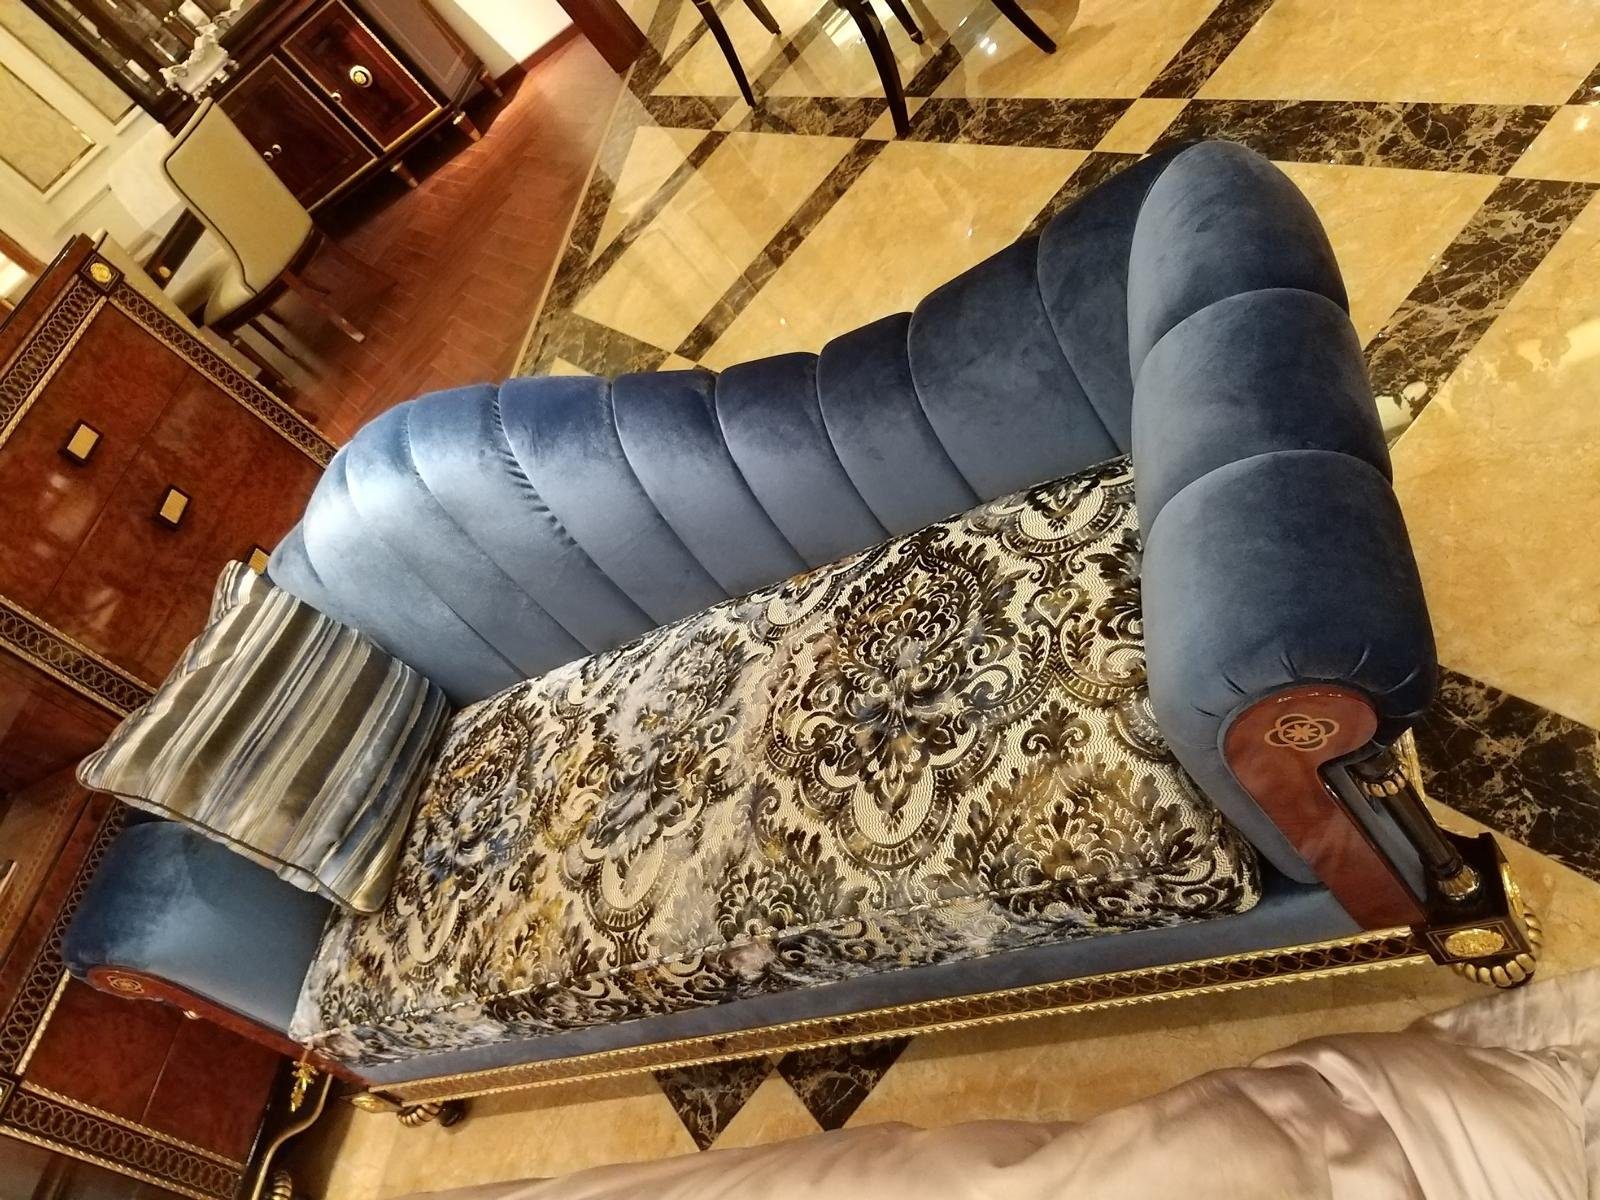 JVmoebel Chaiselongue Blauer Chaiselounge Antik Stil Sofa Liege Textil Barock Rokoko, Made in Europe